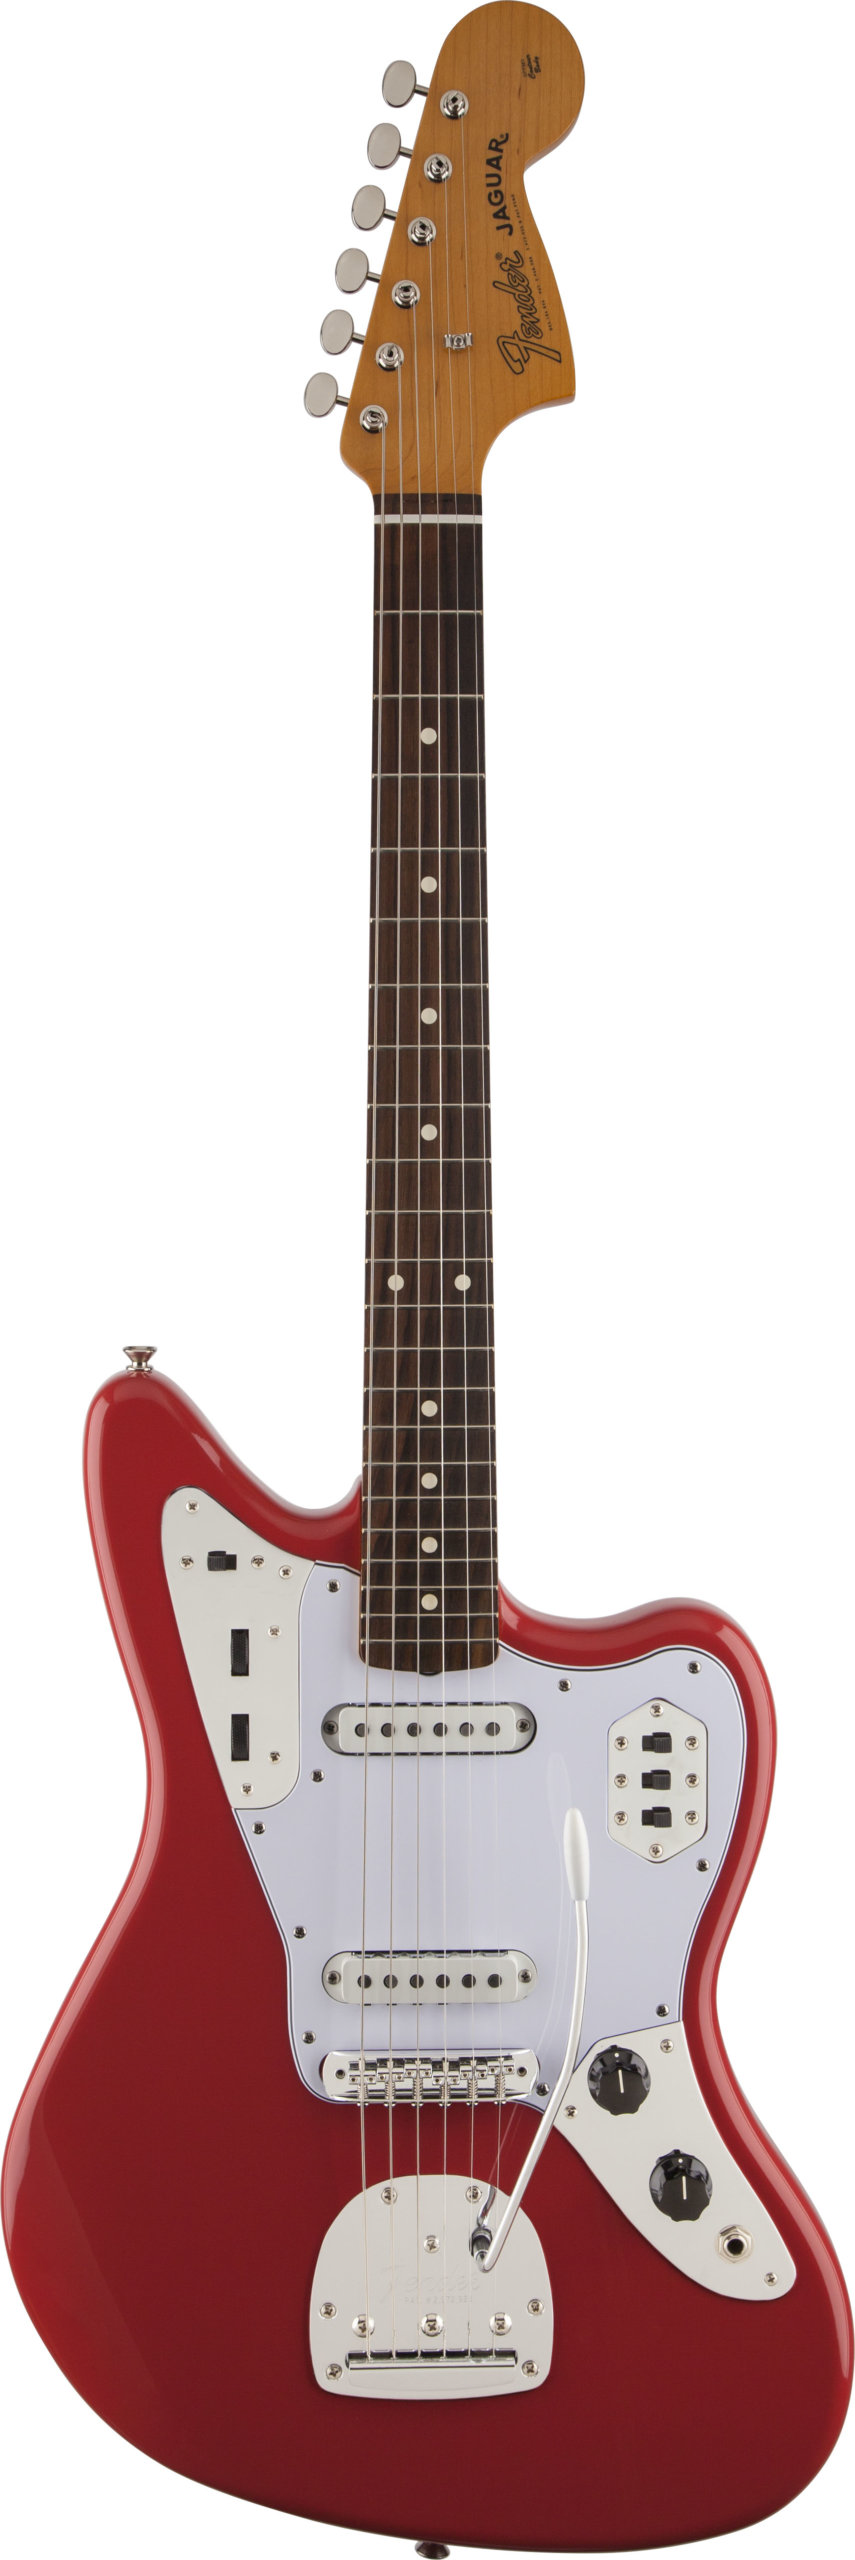 Existencia Oral paleta NAMM 2015: New Fender Electric Guitar Models | Guitar.com | All Things  Guitar